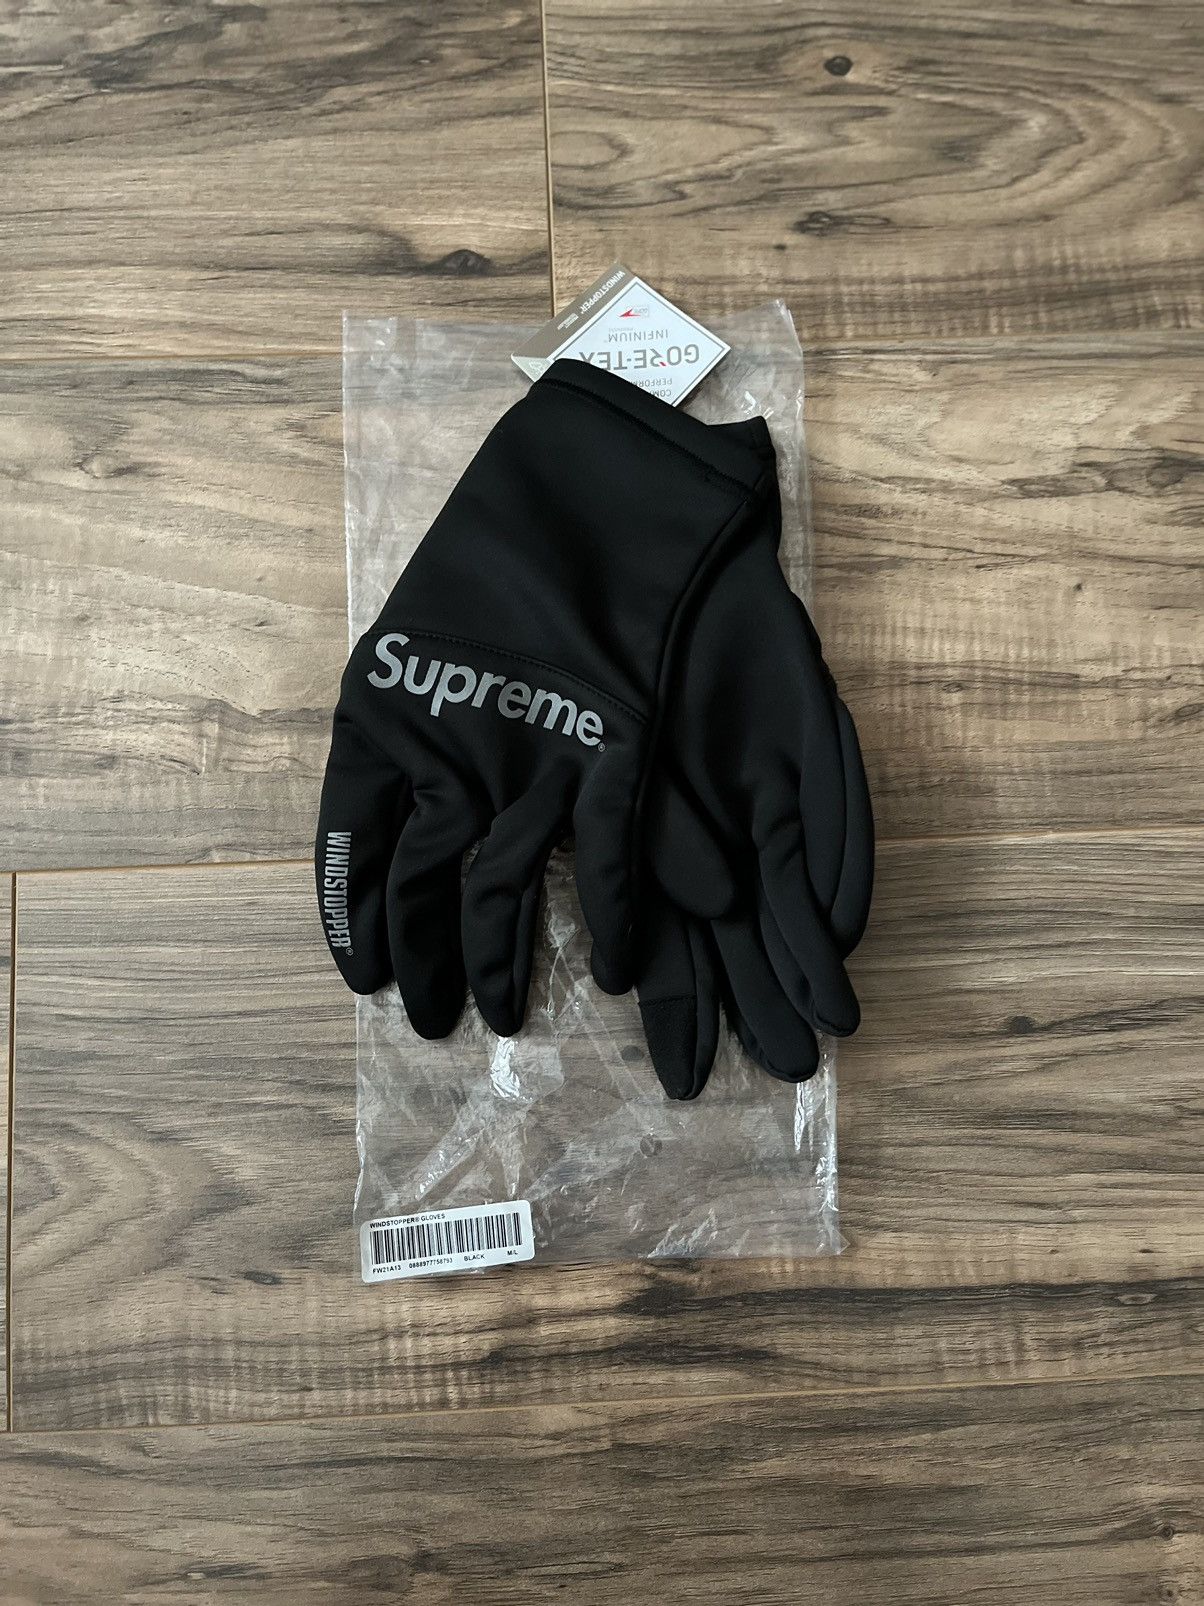 Supreme Supreme Windstopper Gloves Black M/L | Grailed